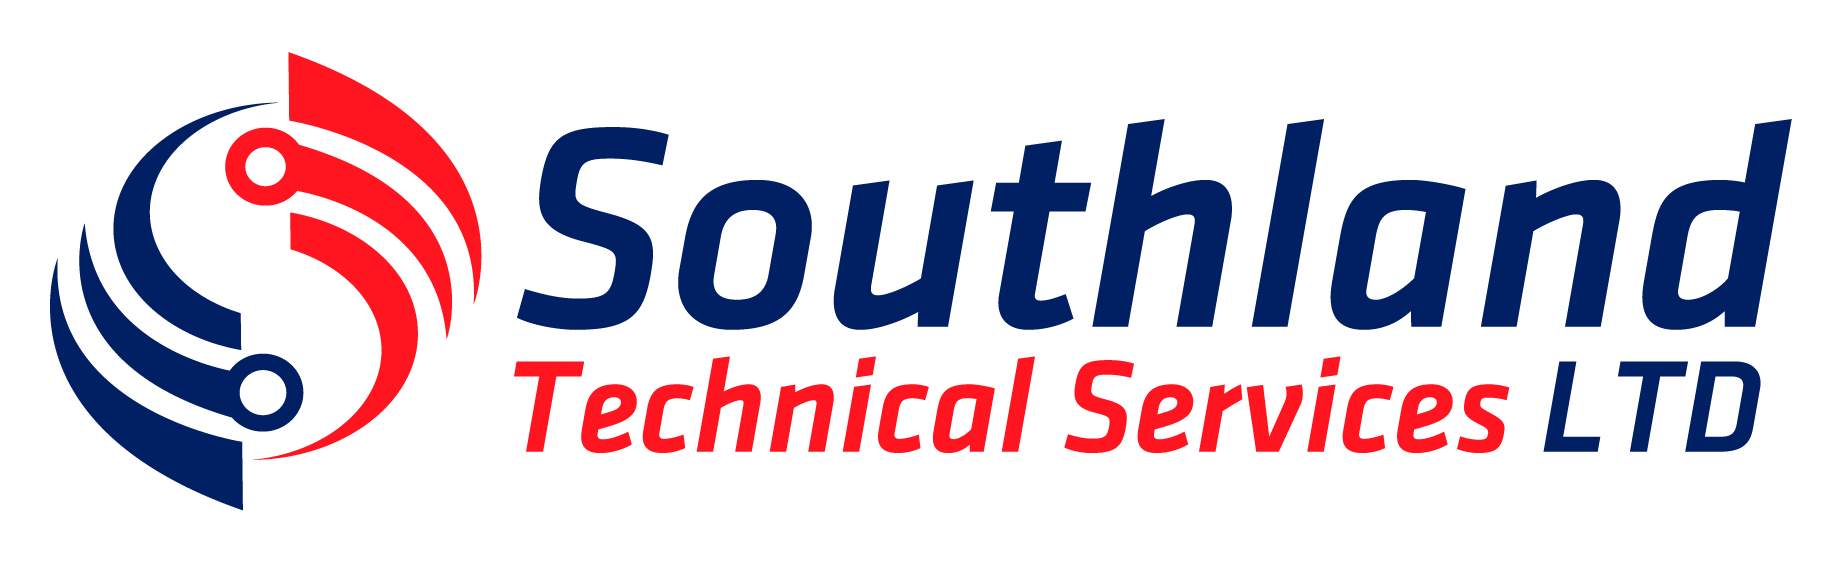 Appliance Repair Service Logo - Southland Technical Services LTD Repair Calgary